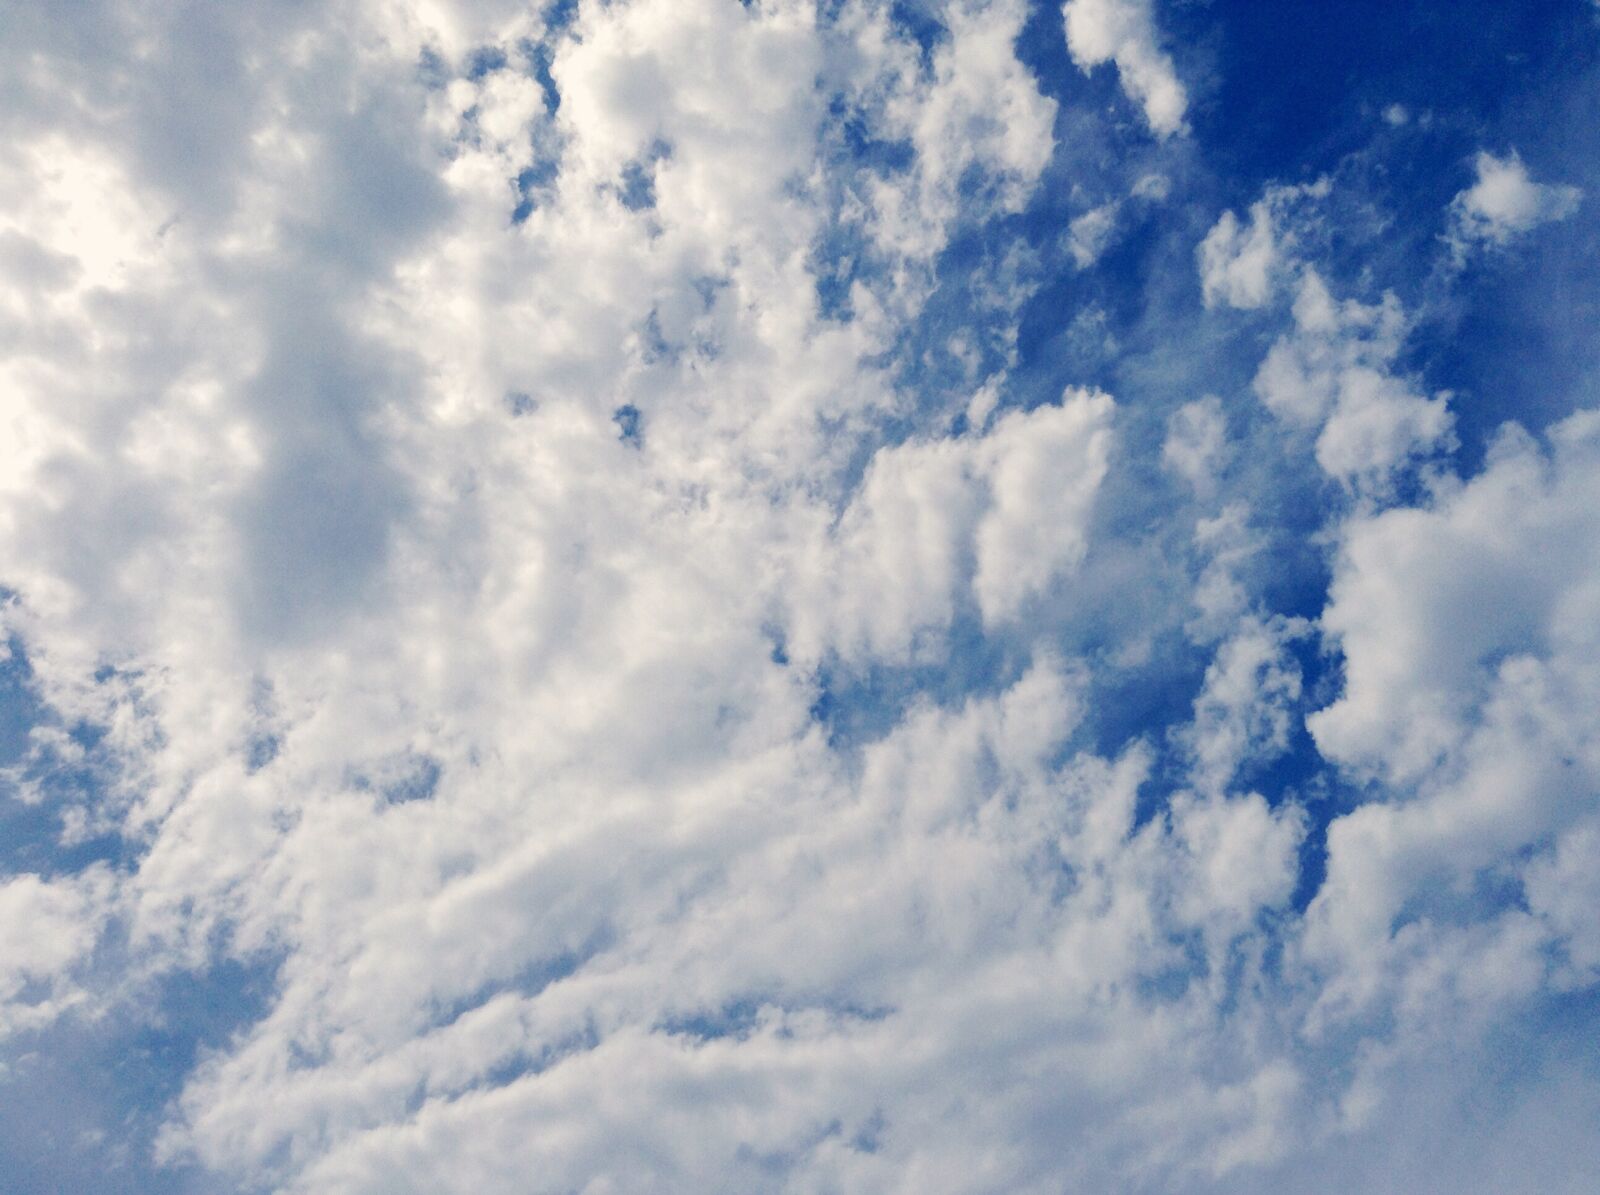 iPad mini back camera 3.3mm f/2.4 sample photo. Sky, clouds, blue photography